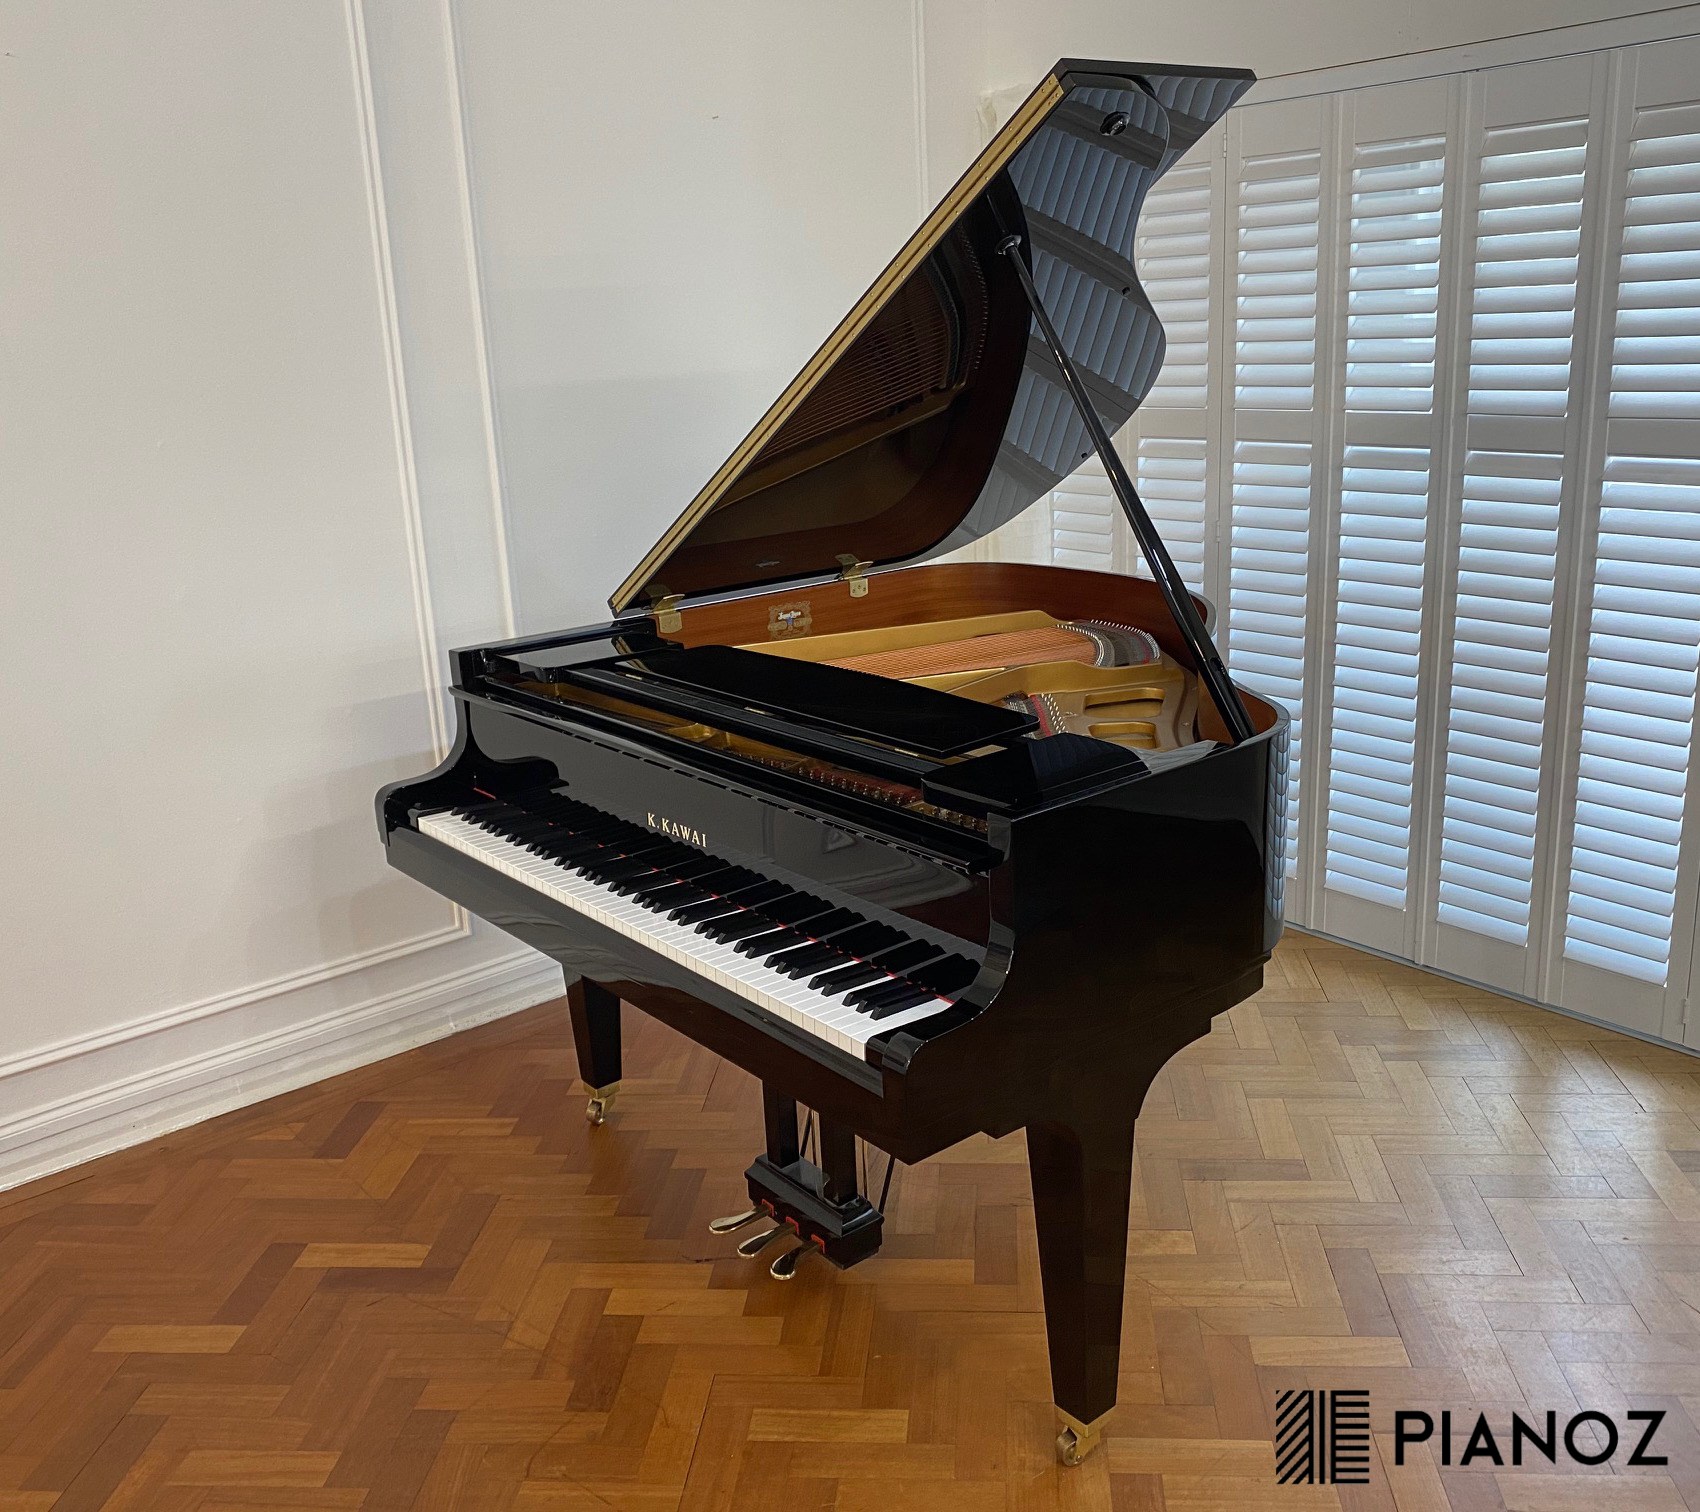 Kawai GM10 Baby Grand Piano piano for sale in UK